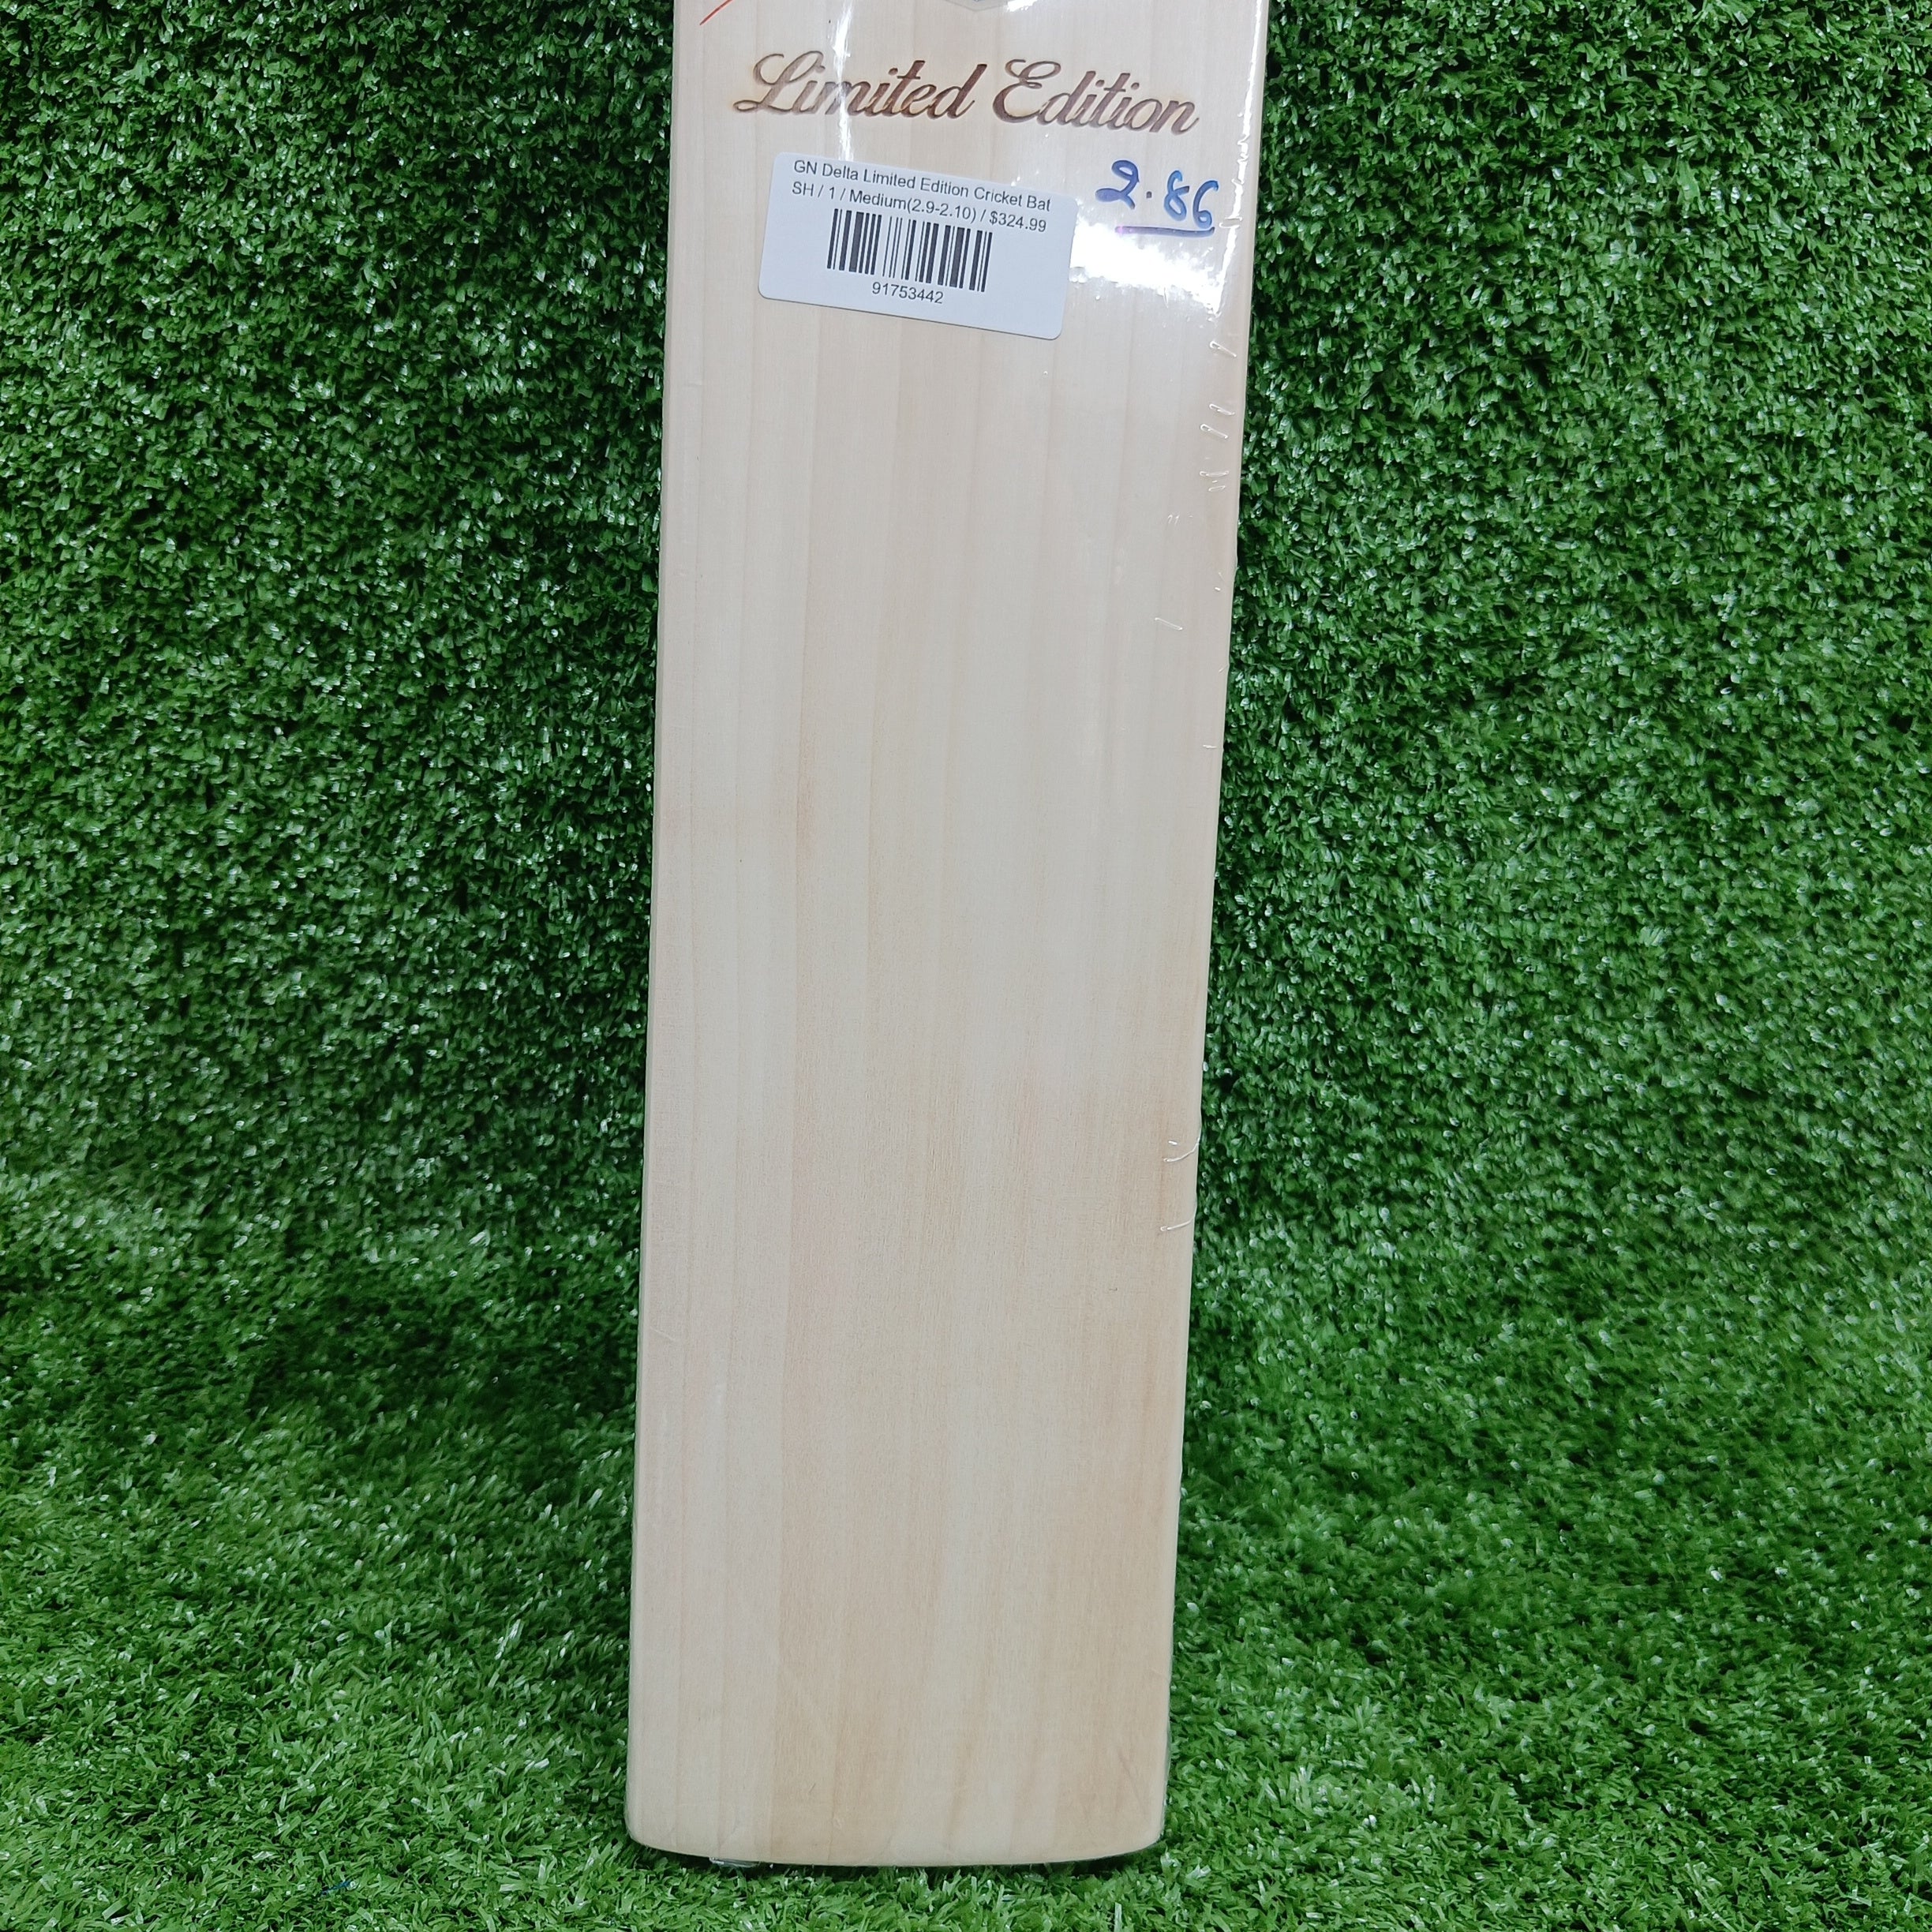 Gray-Nicolls Delta Limited Edition Cricket Bat